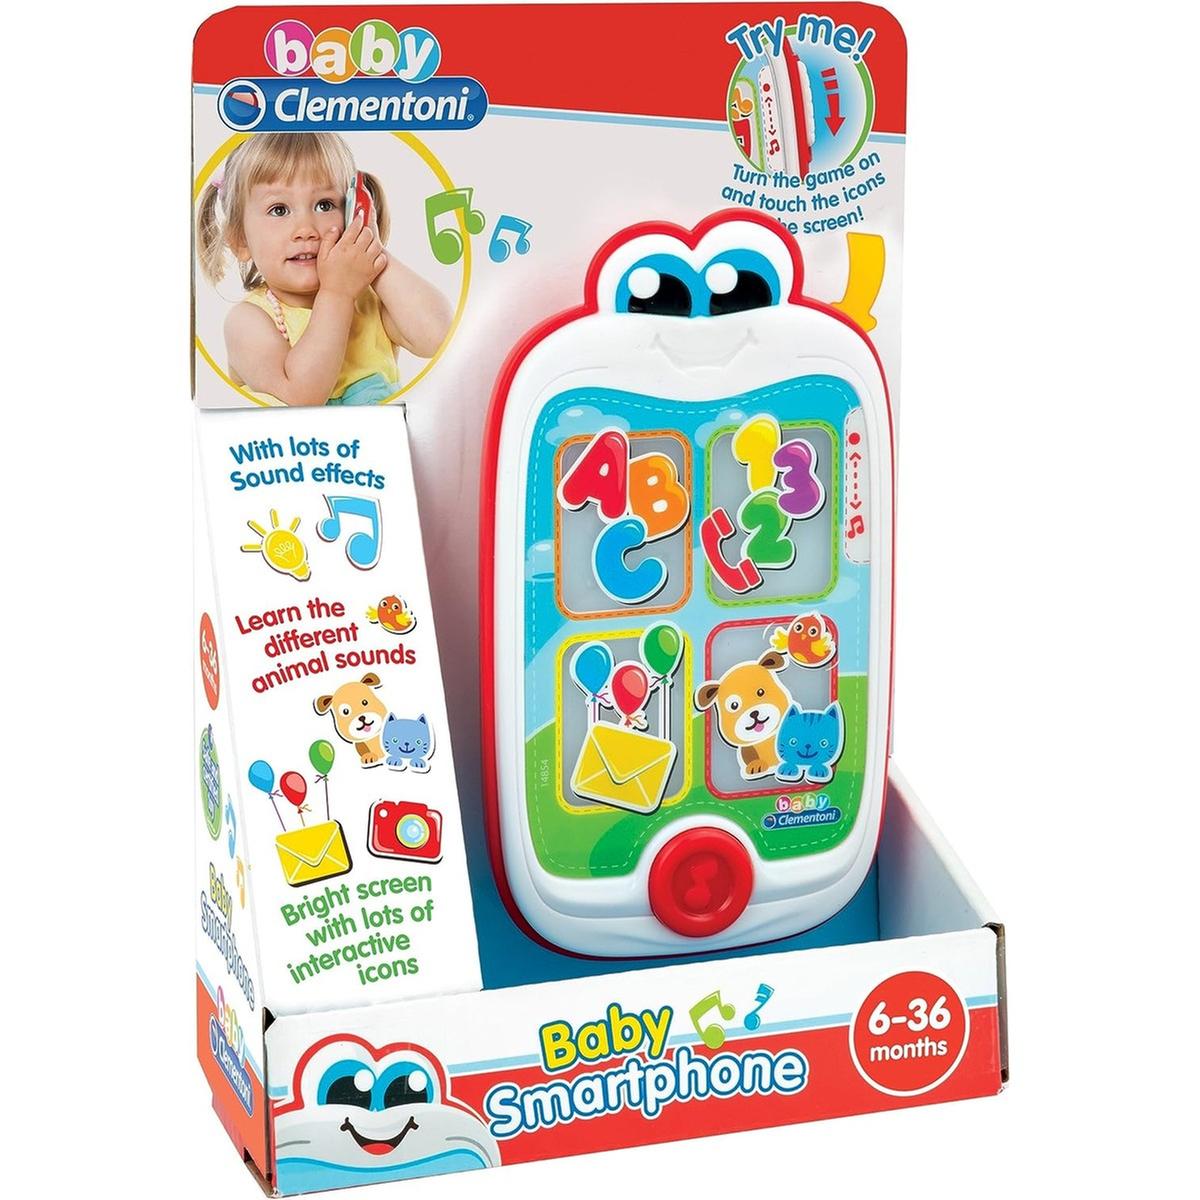 Clementoni - Smartphone brinquedo para bebé com som ㅤ, Clementoni